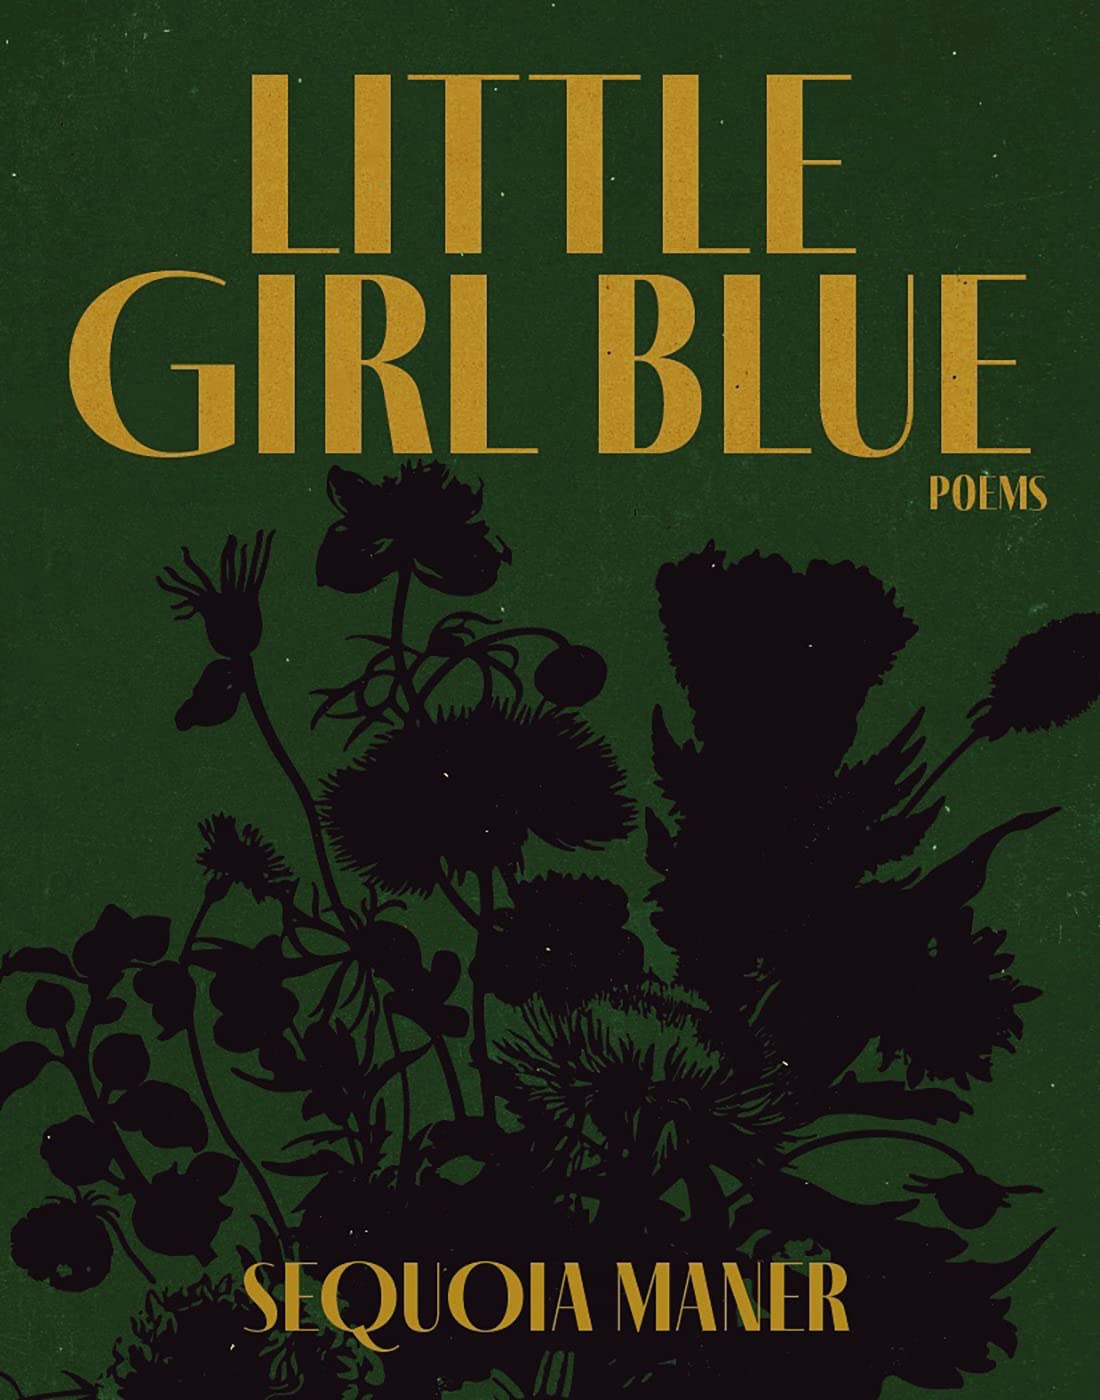 Little Girl Blue, by Sequoia Maner